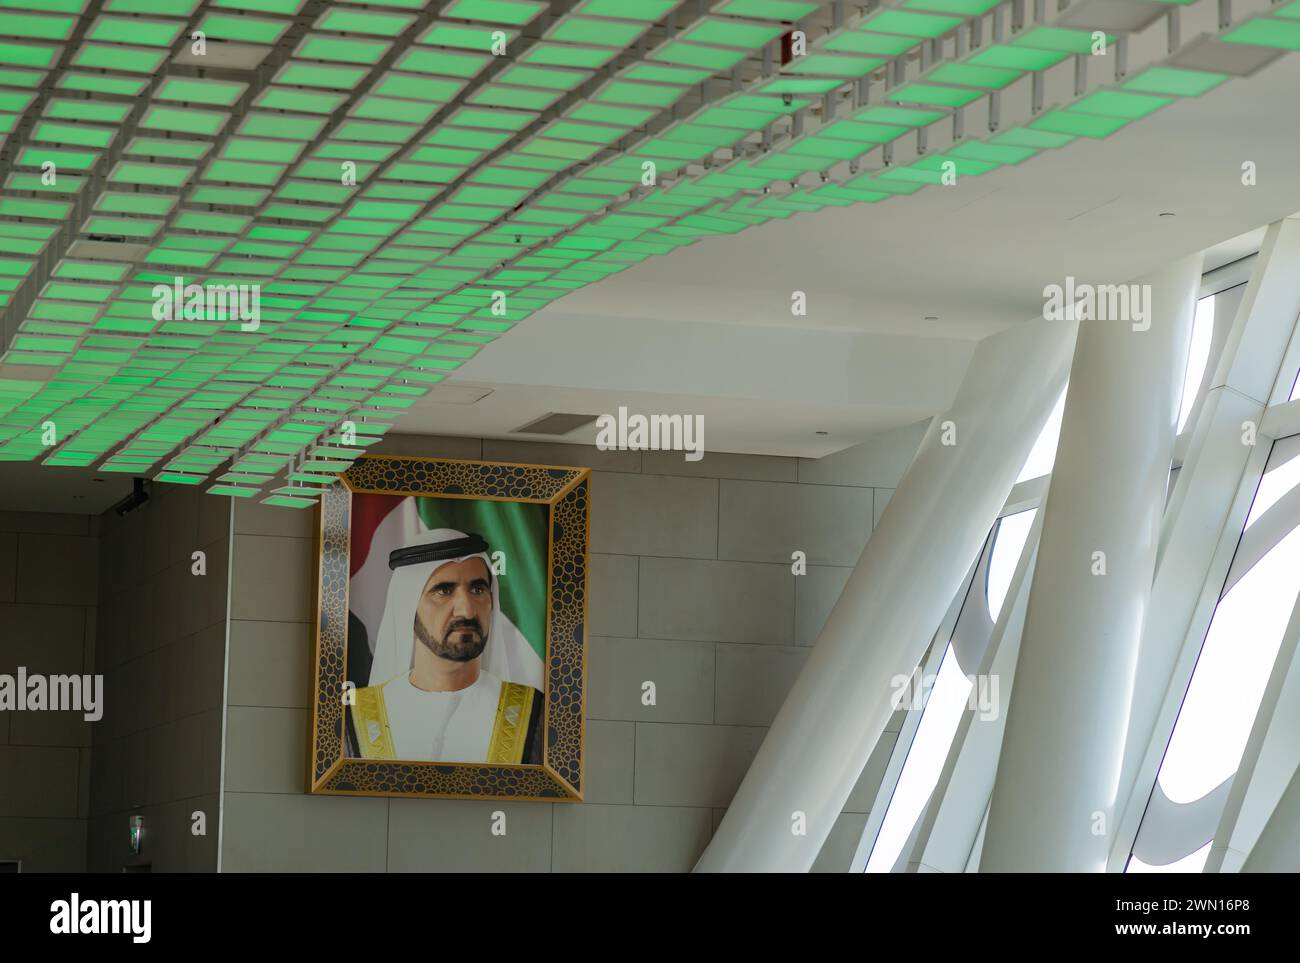 A picture of a portrait of the Sheikh Mohammed bin Rashid Al Maktoum inside the Dubai Frame. Stock Photo